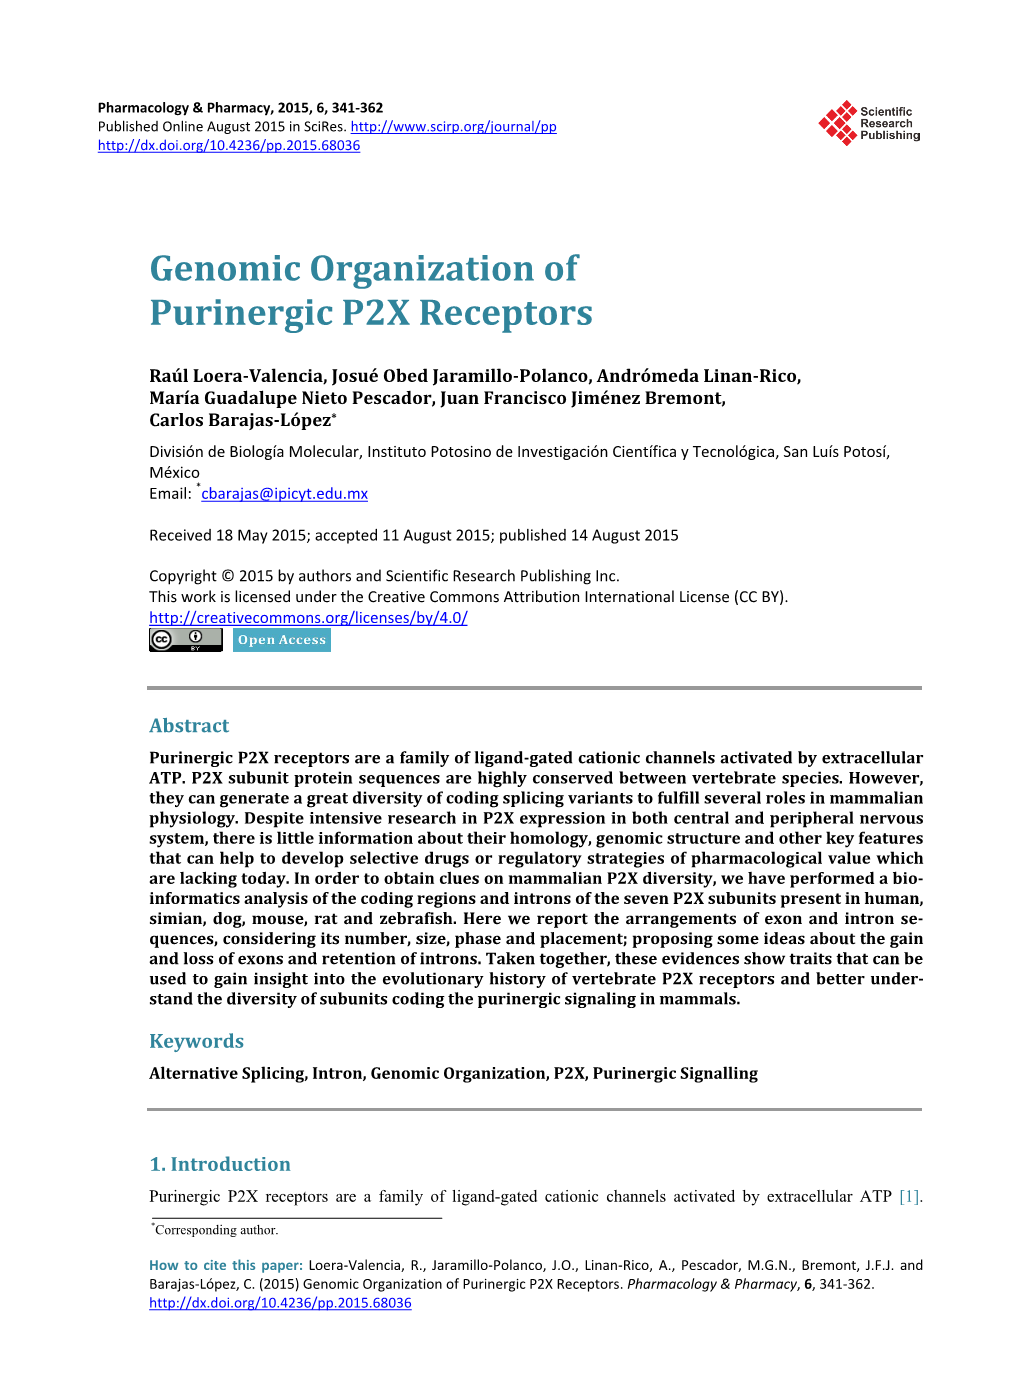 Genomic Organization of Purinergic P2X Receptors